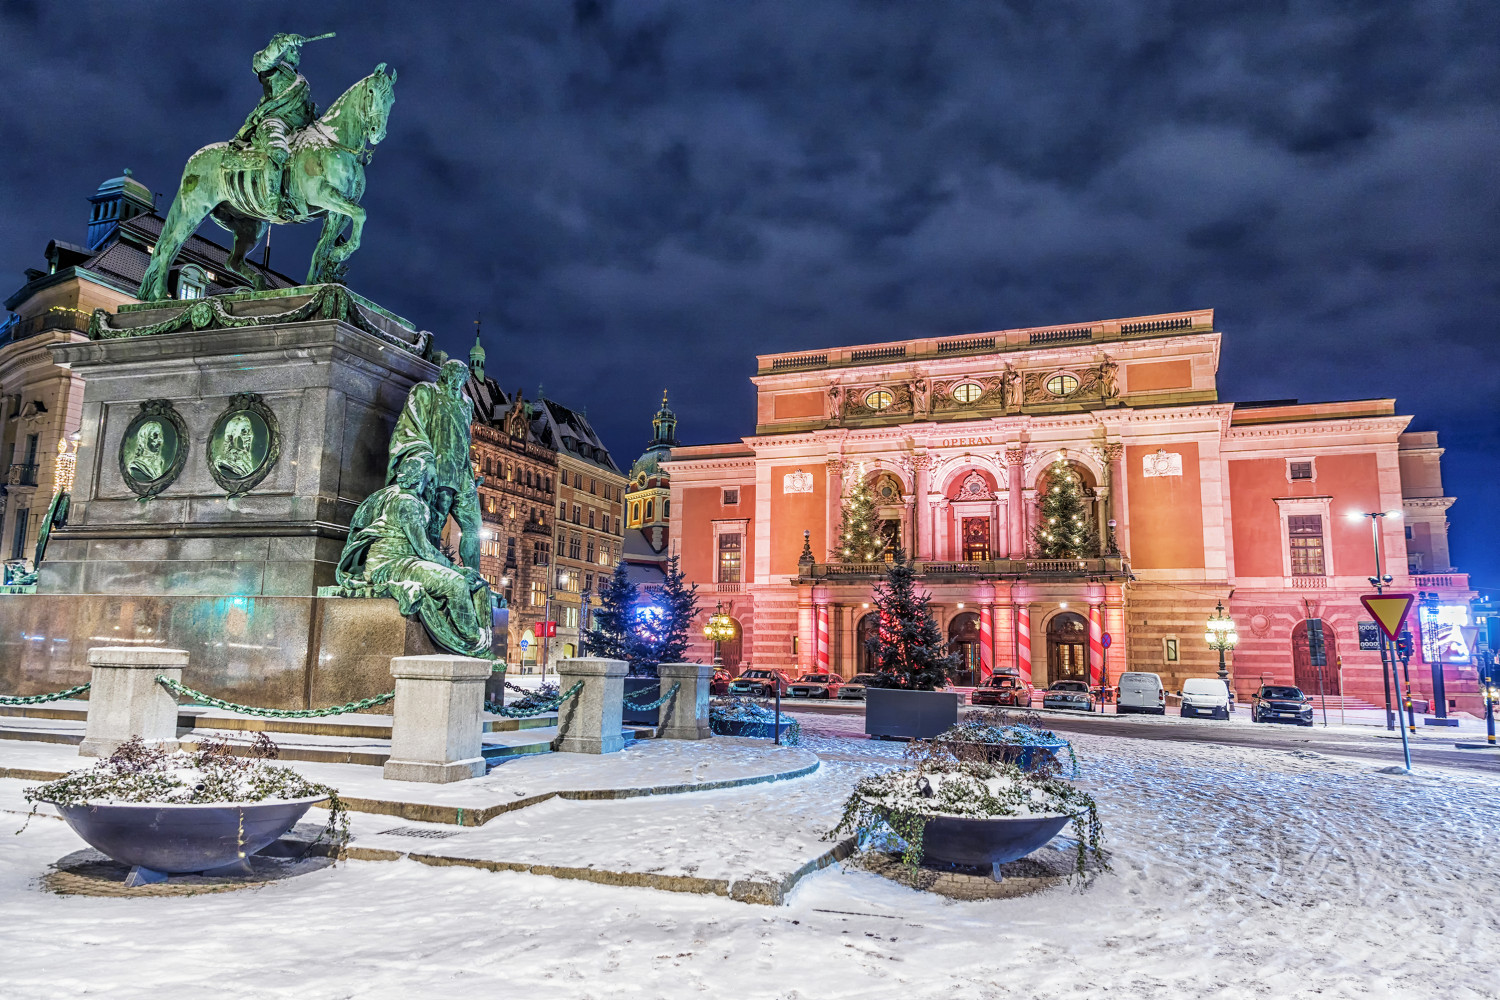 The Royal Swedish Opera in Stockholm, Sweden.